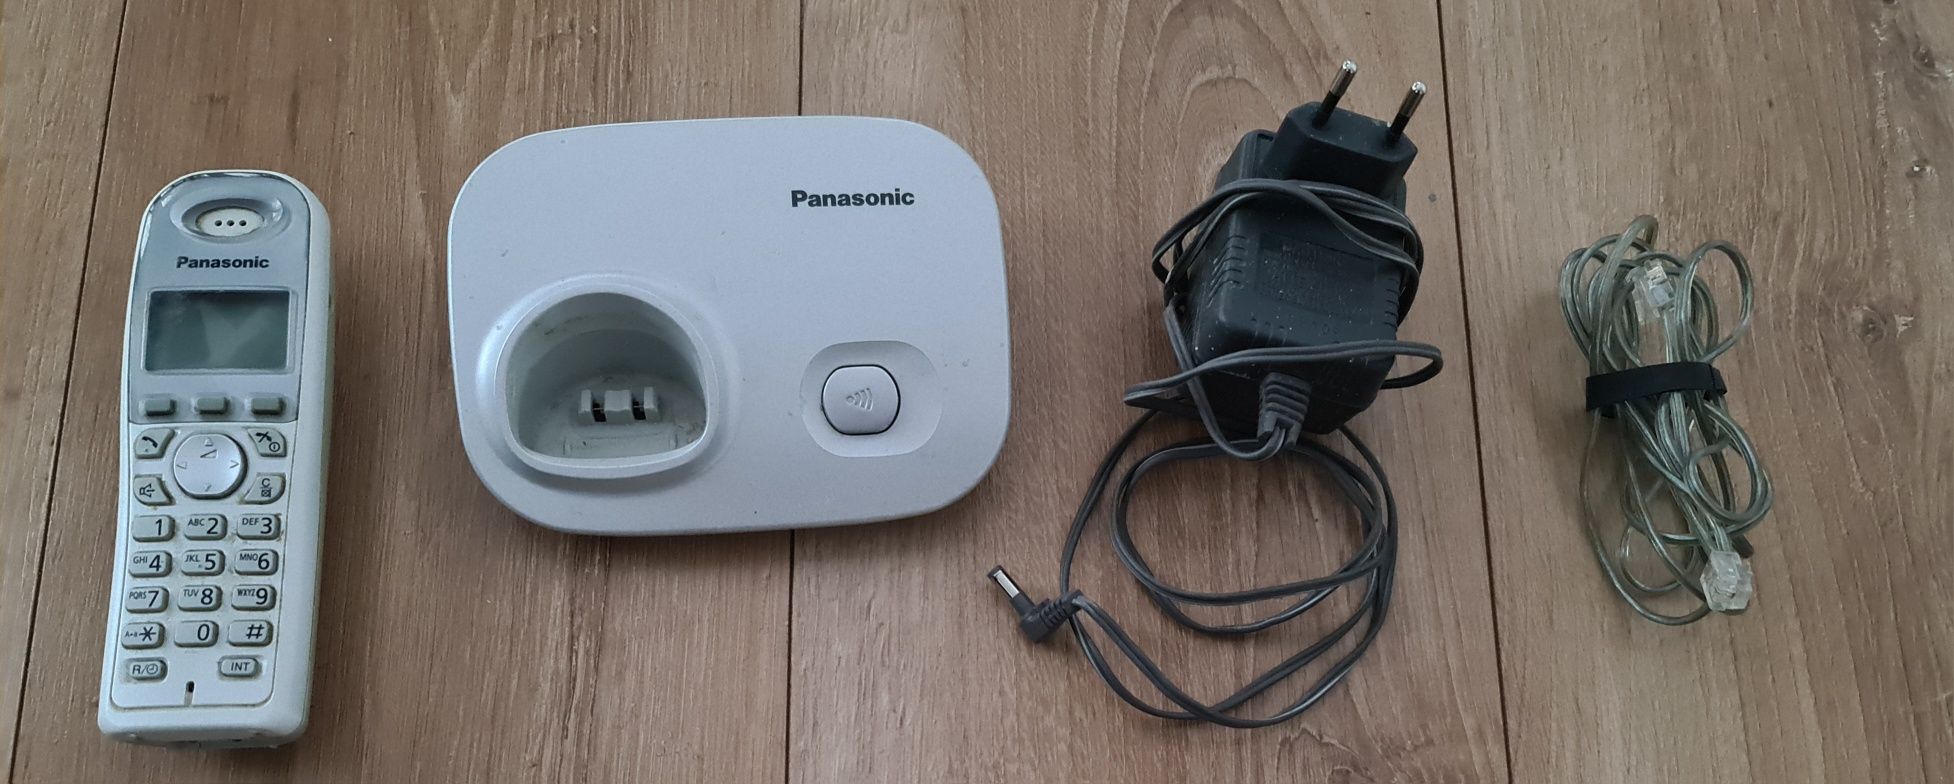 Telefon - aparat stacjonarny Panasonic